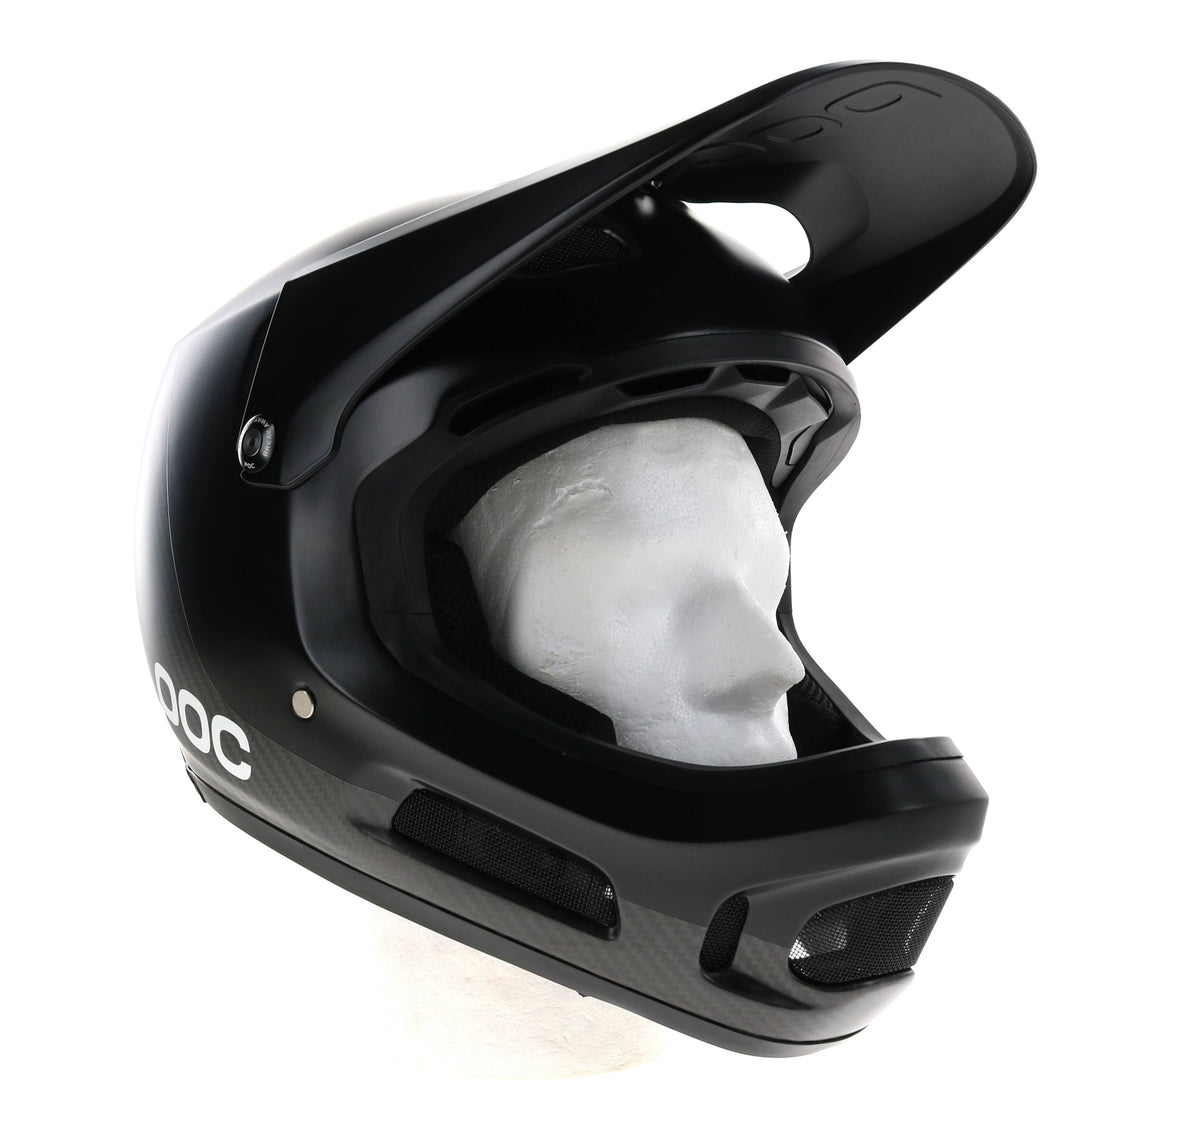 POC Coron Air Mips Helmet